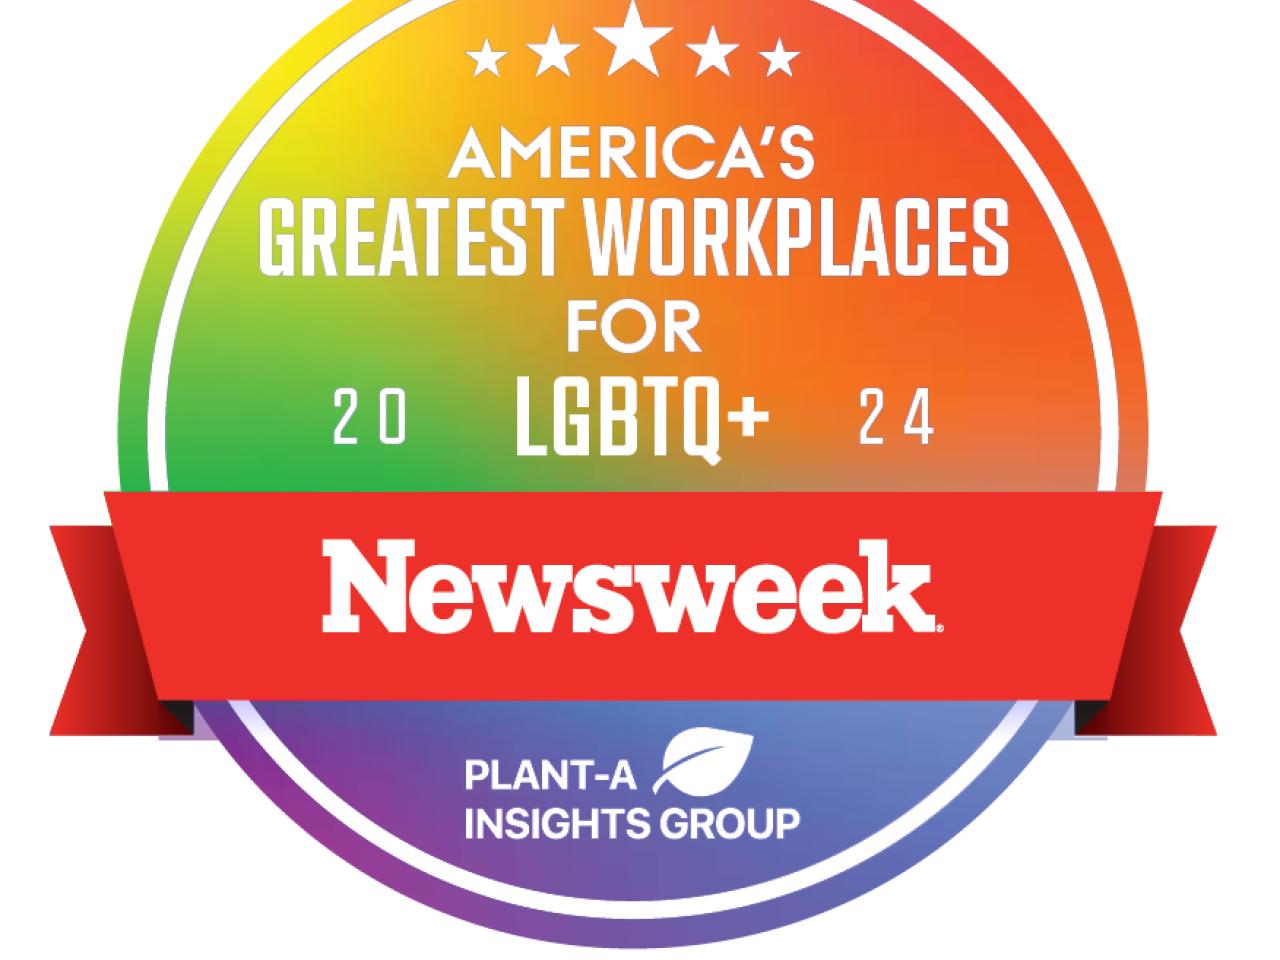 America's Greatest Workplaces for LGBTQ+ award logo